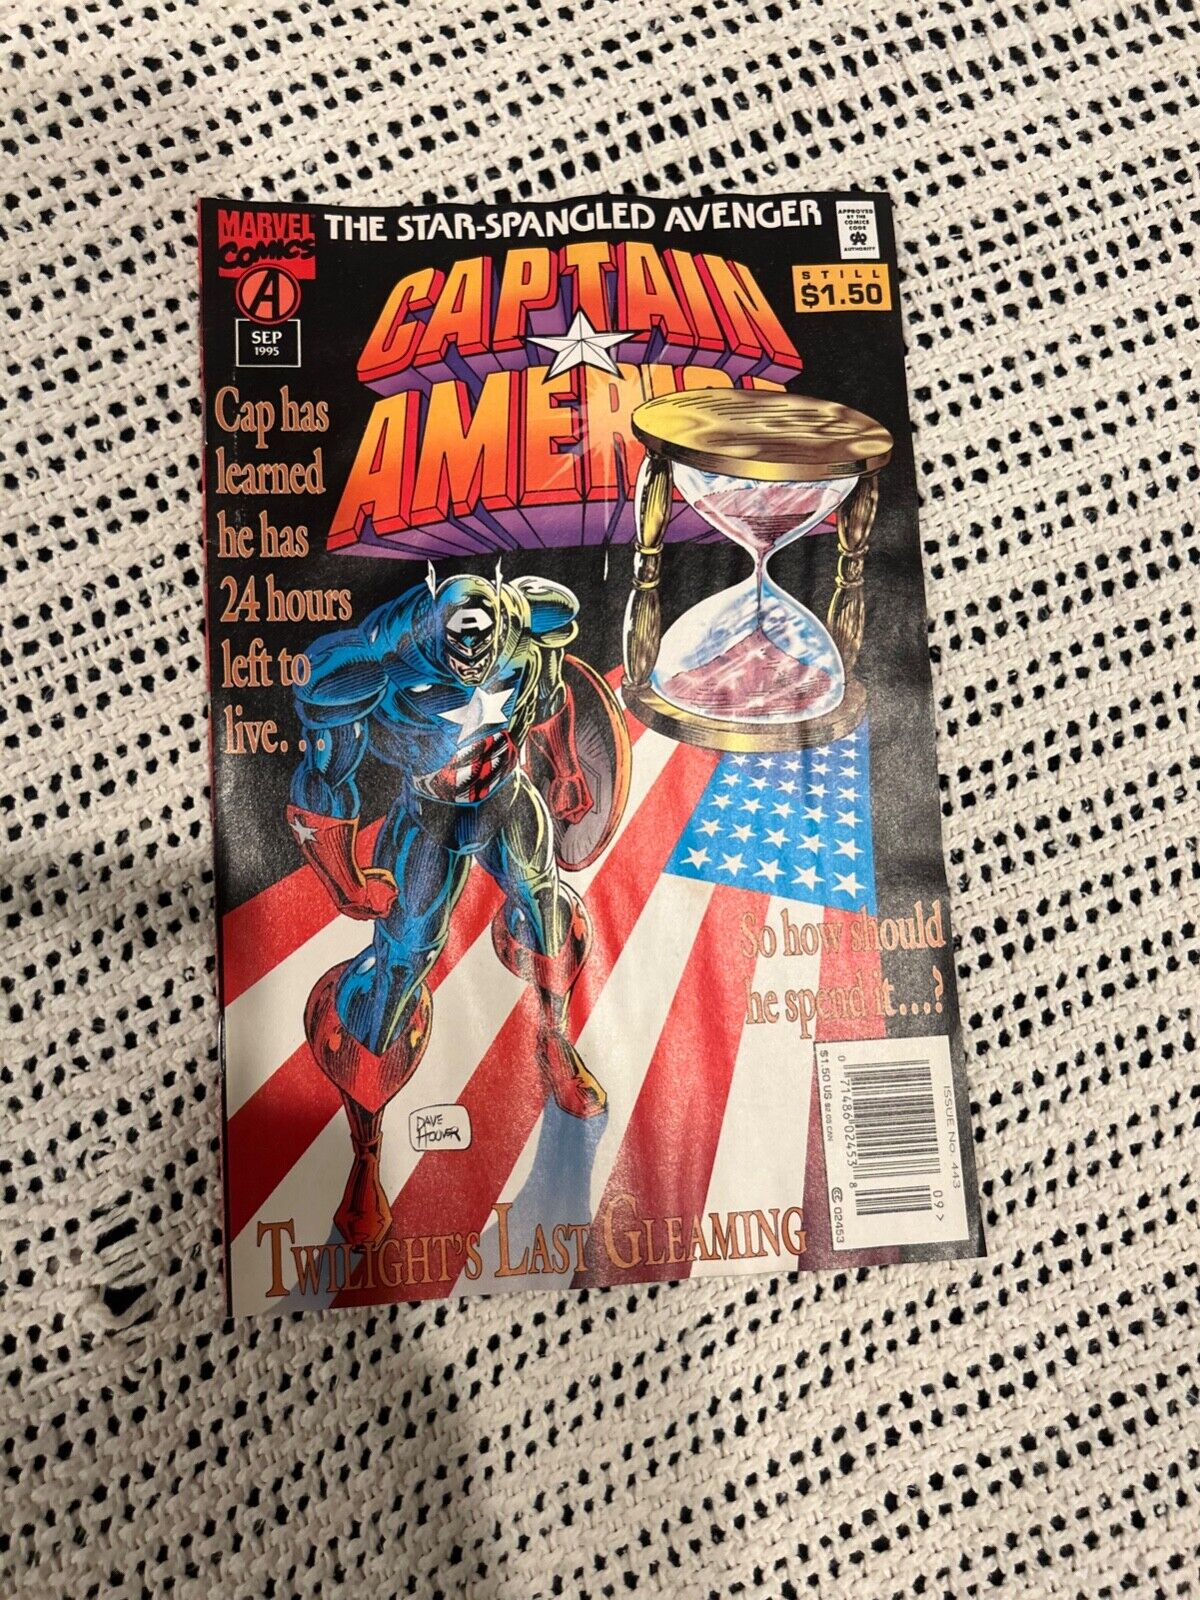 Captain america comic book - Marvel - September 1995 - Vintage